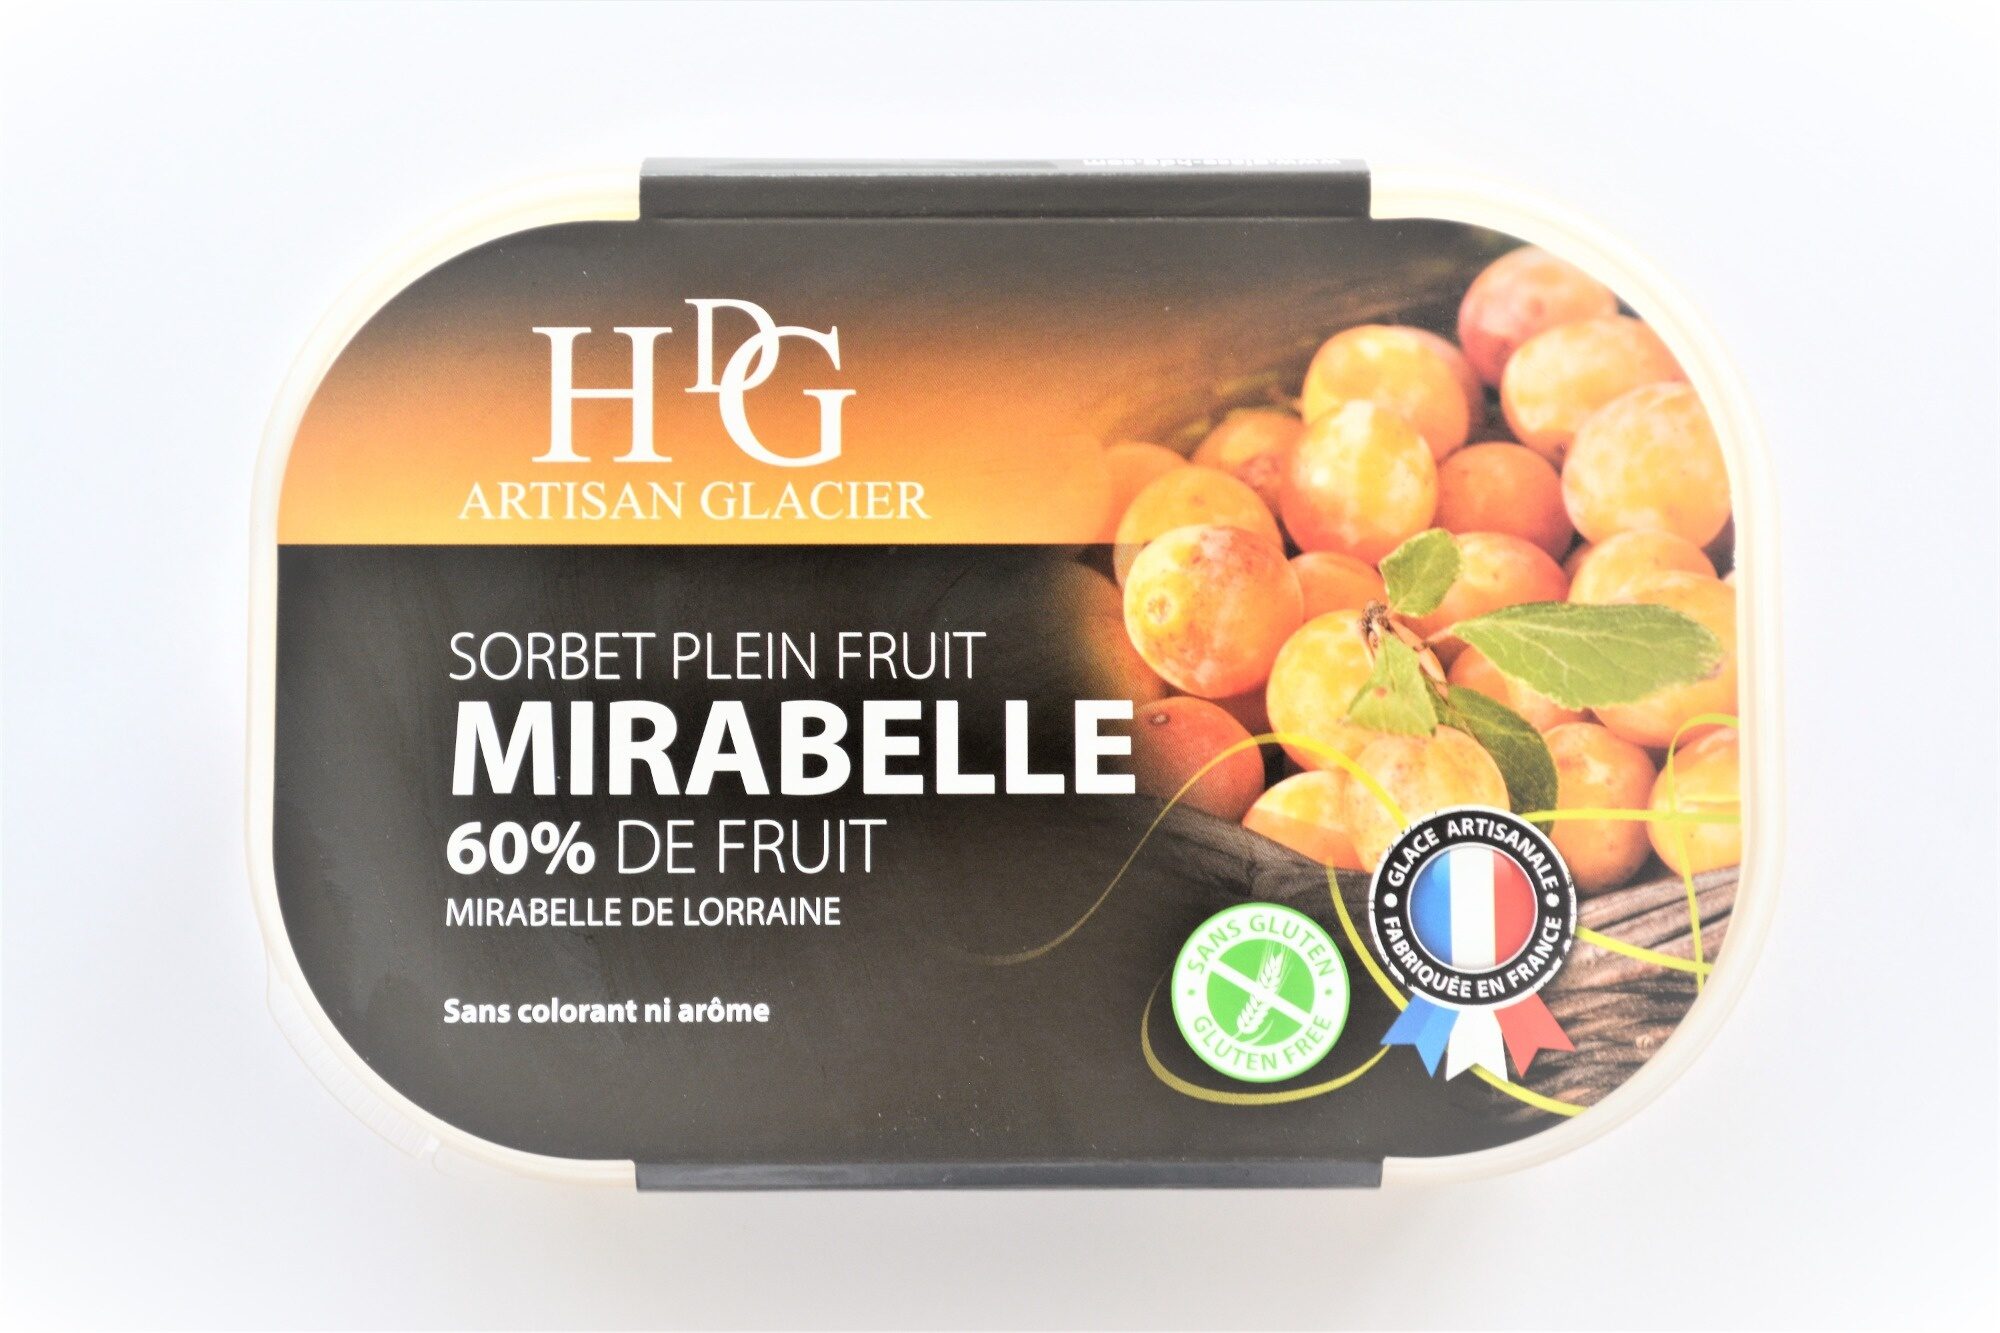 Sorbet plein fruit MIRABELLE, 60% de fruit - Producto - fr